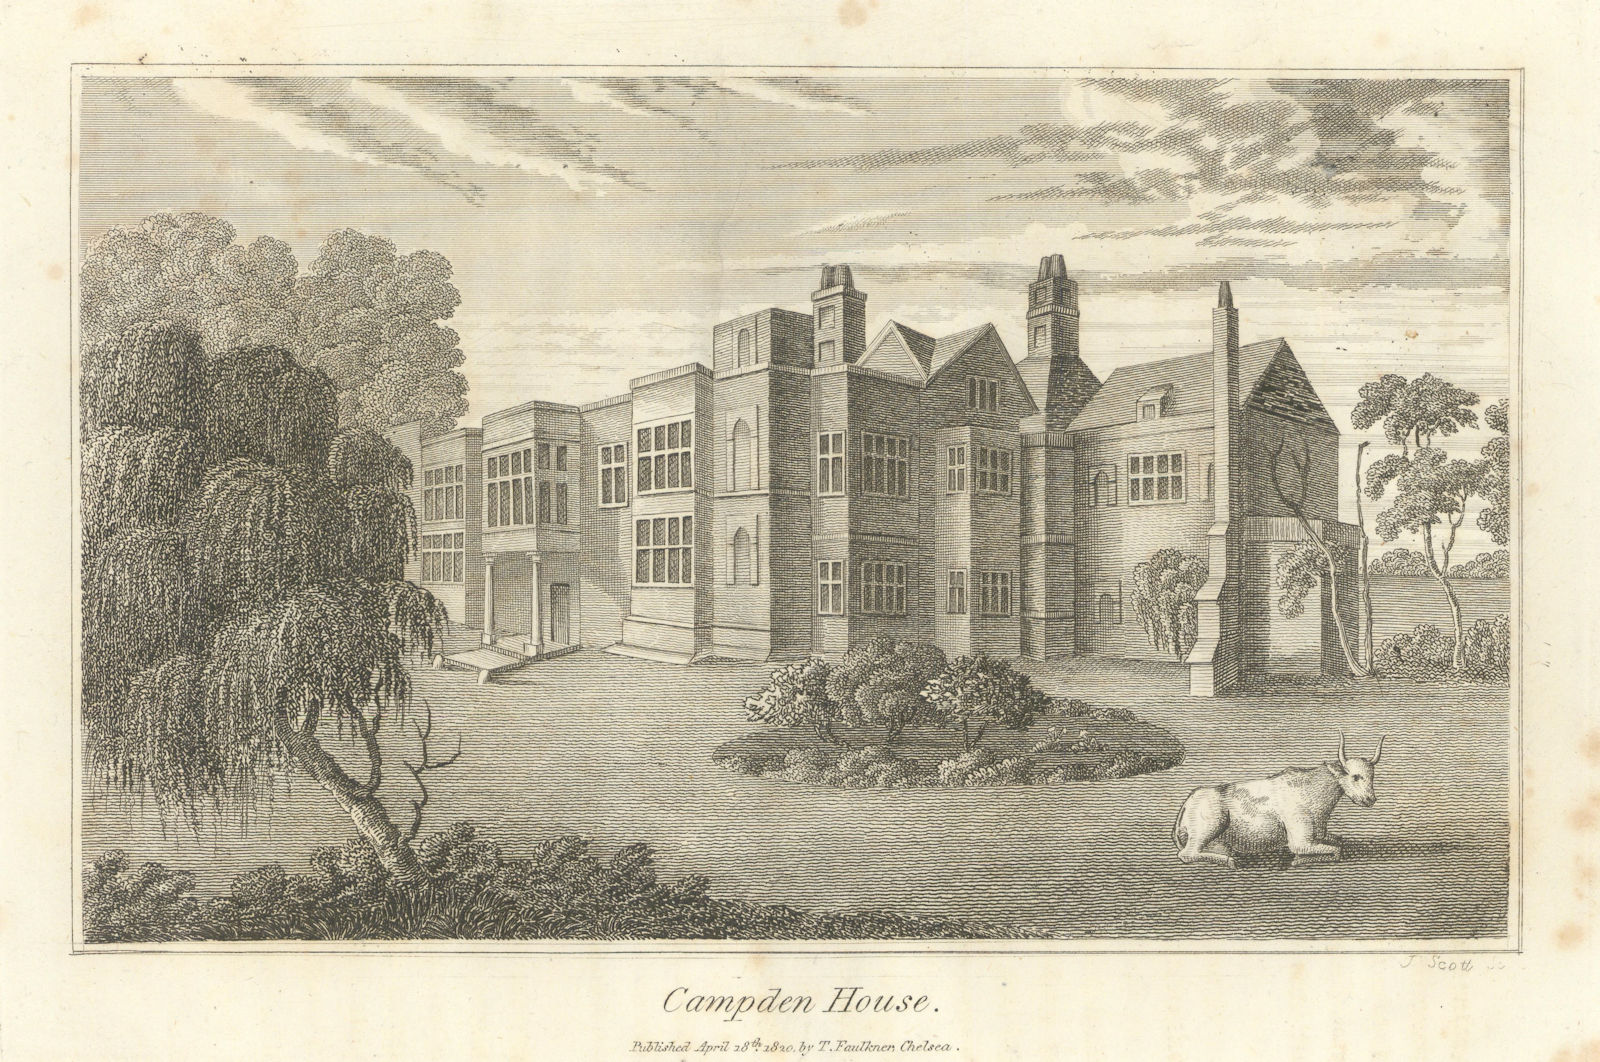 Associate Product Campden House, Kensington by Thomas Faulkner. Burnt down 1862 1820 old print